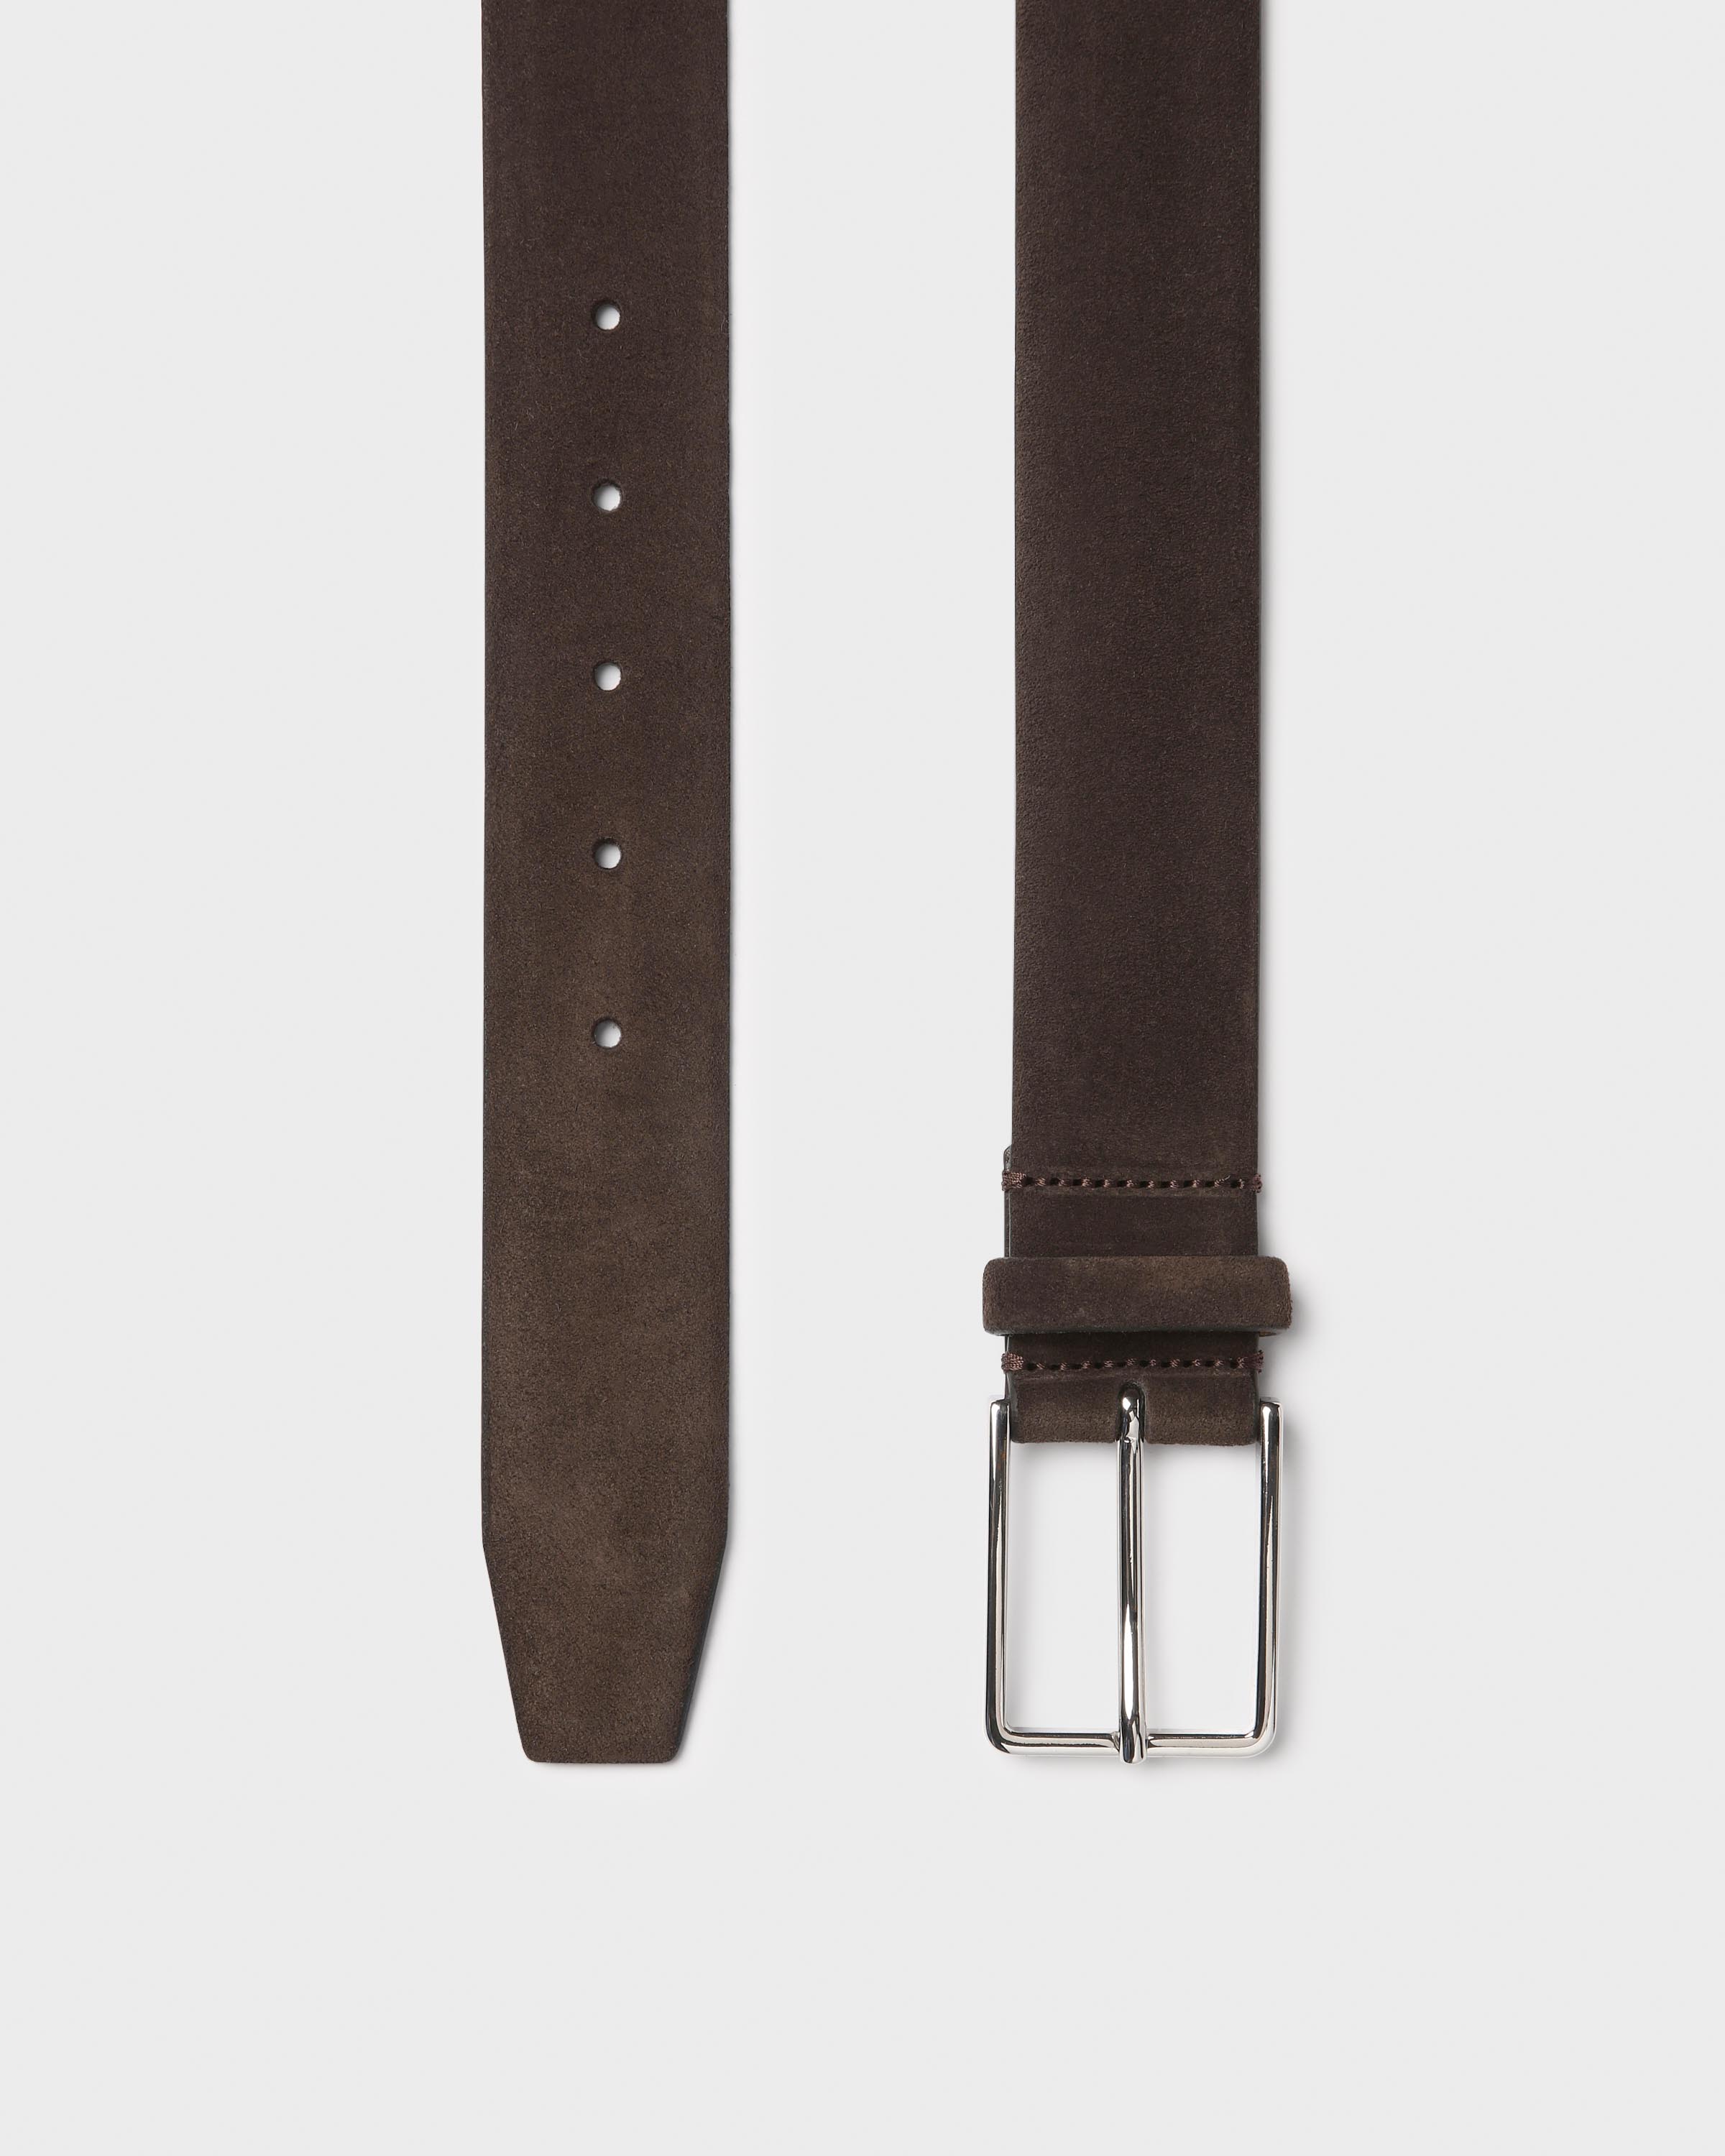 Buy Mars belt at  - The swedish leather brand